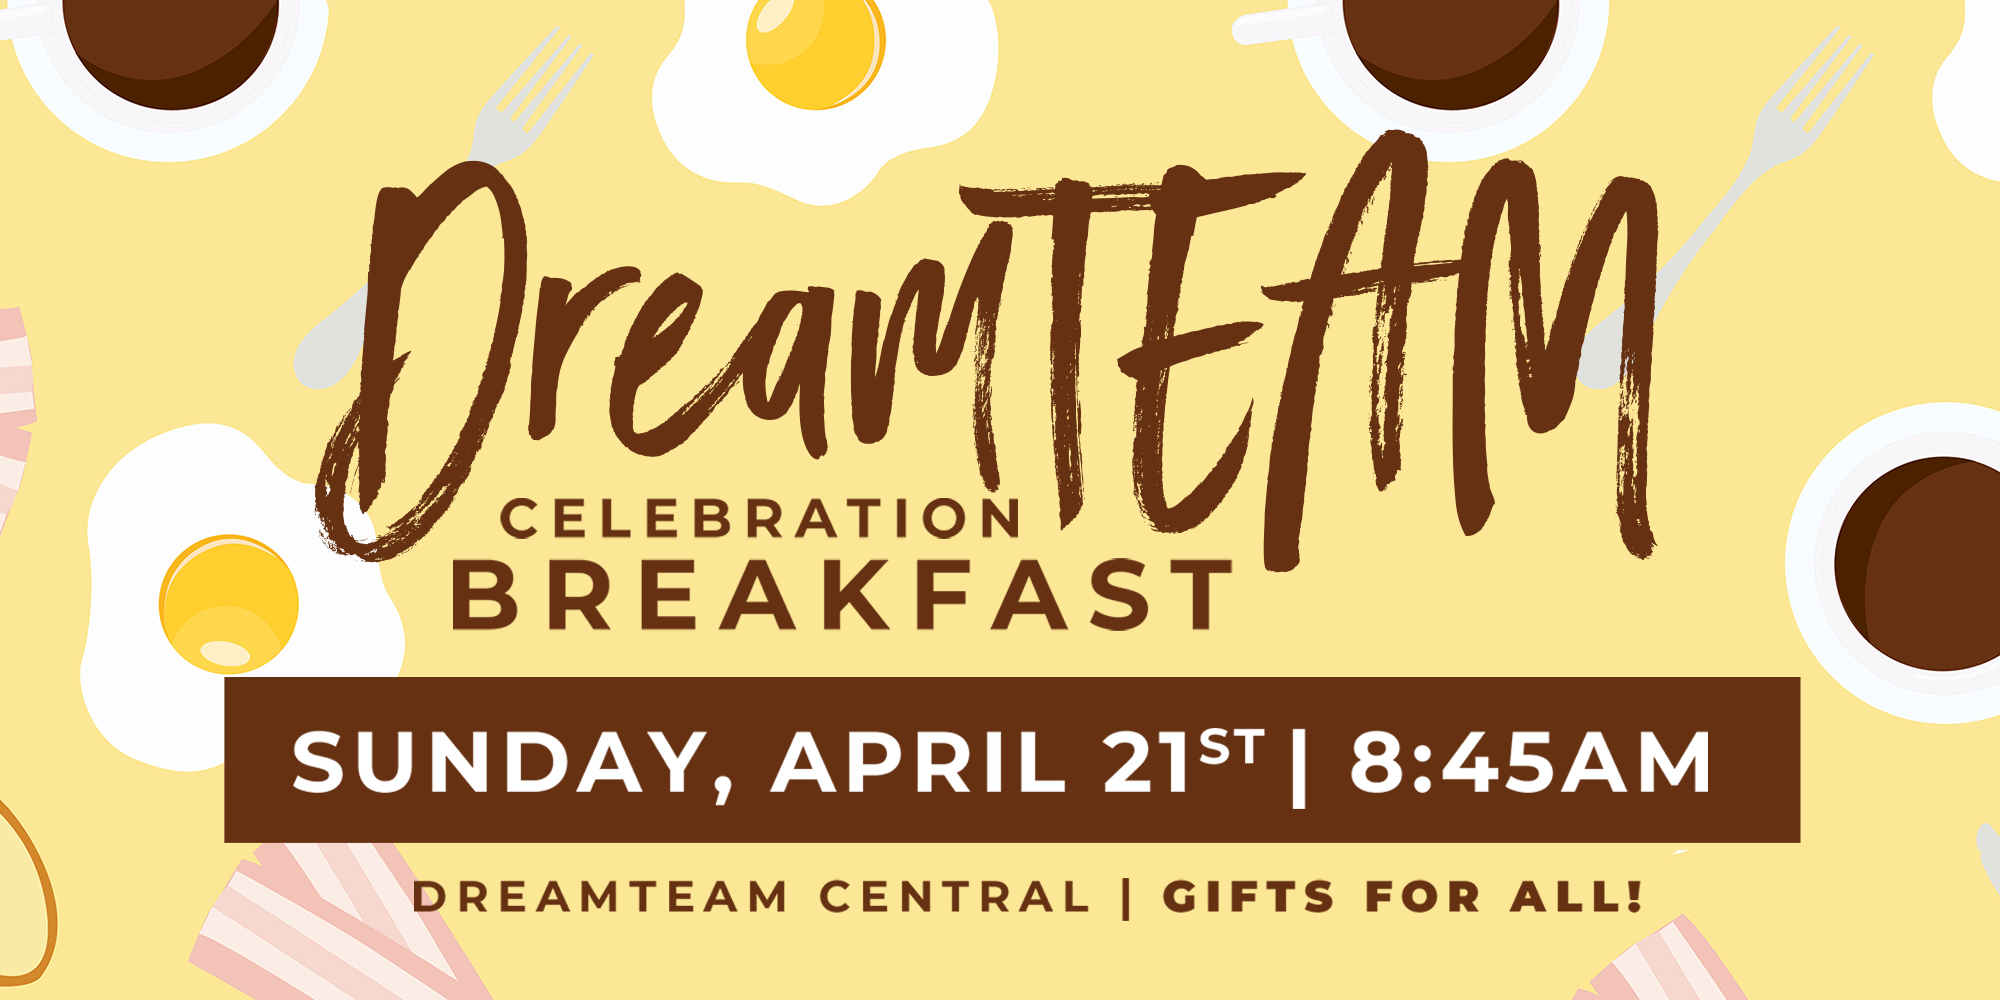 DreamTEAM Celebration Breakfast Sunday, April 21st | 8:45am DreamTEAM Central | Gifts for All!